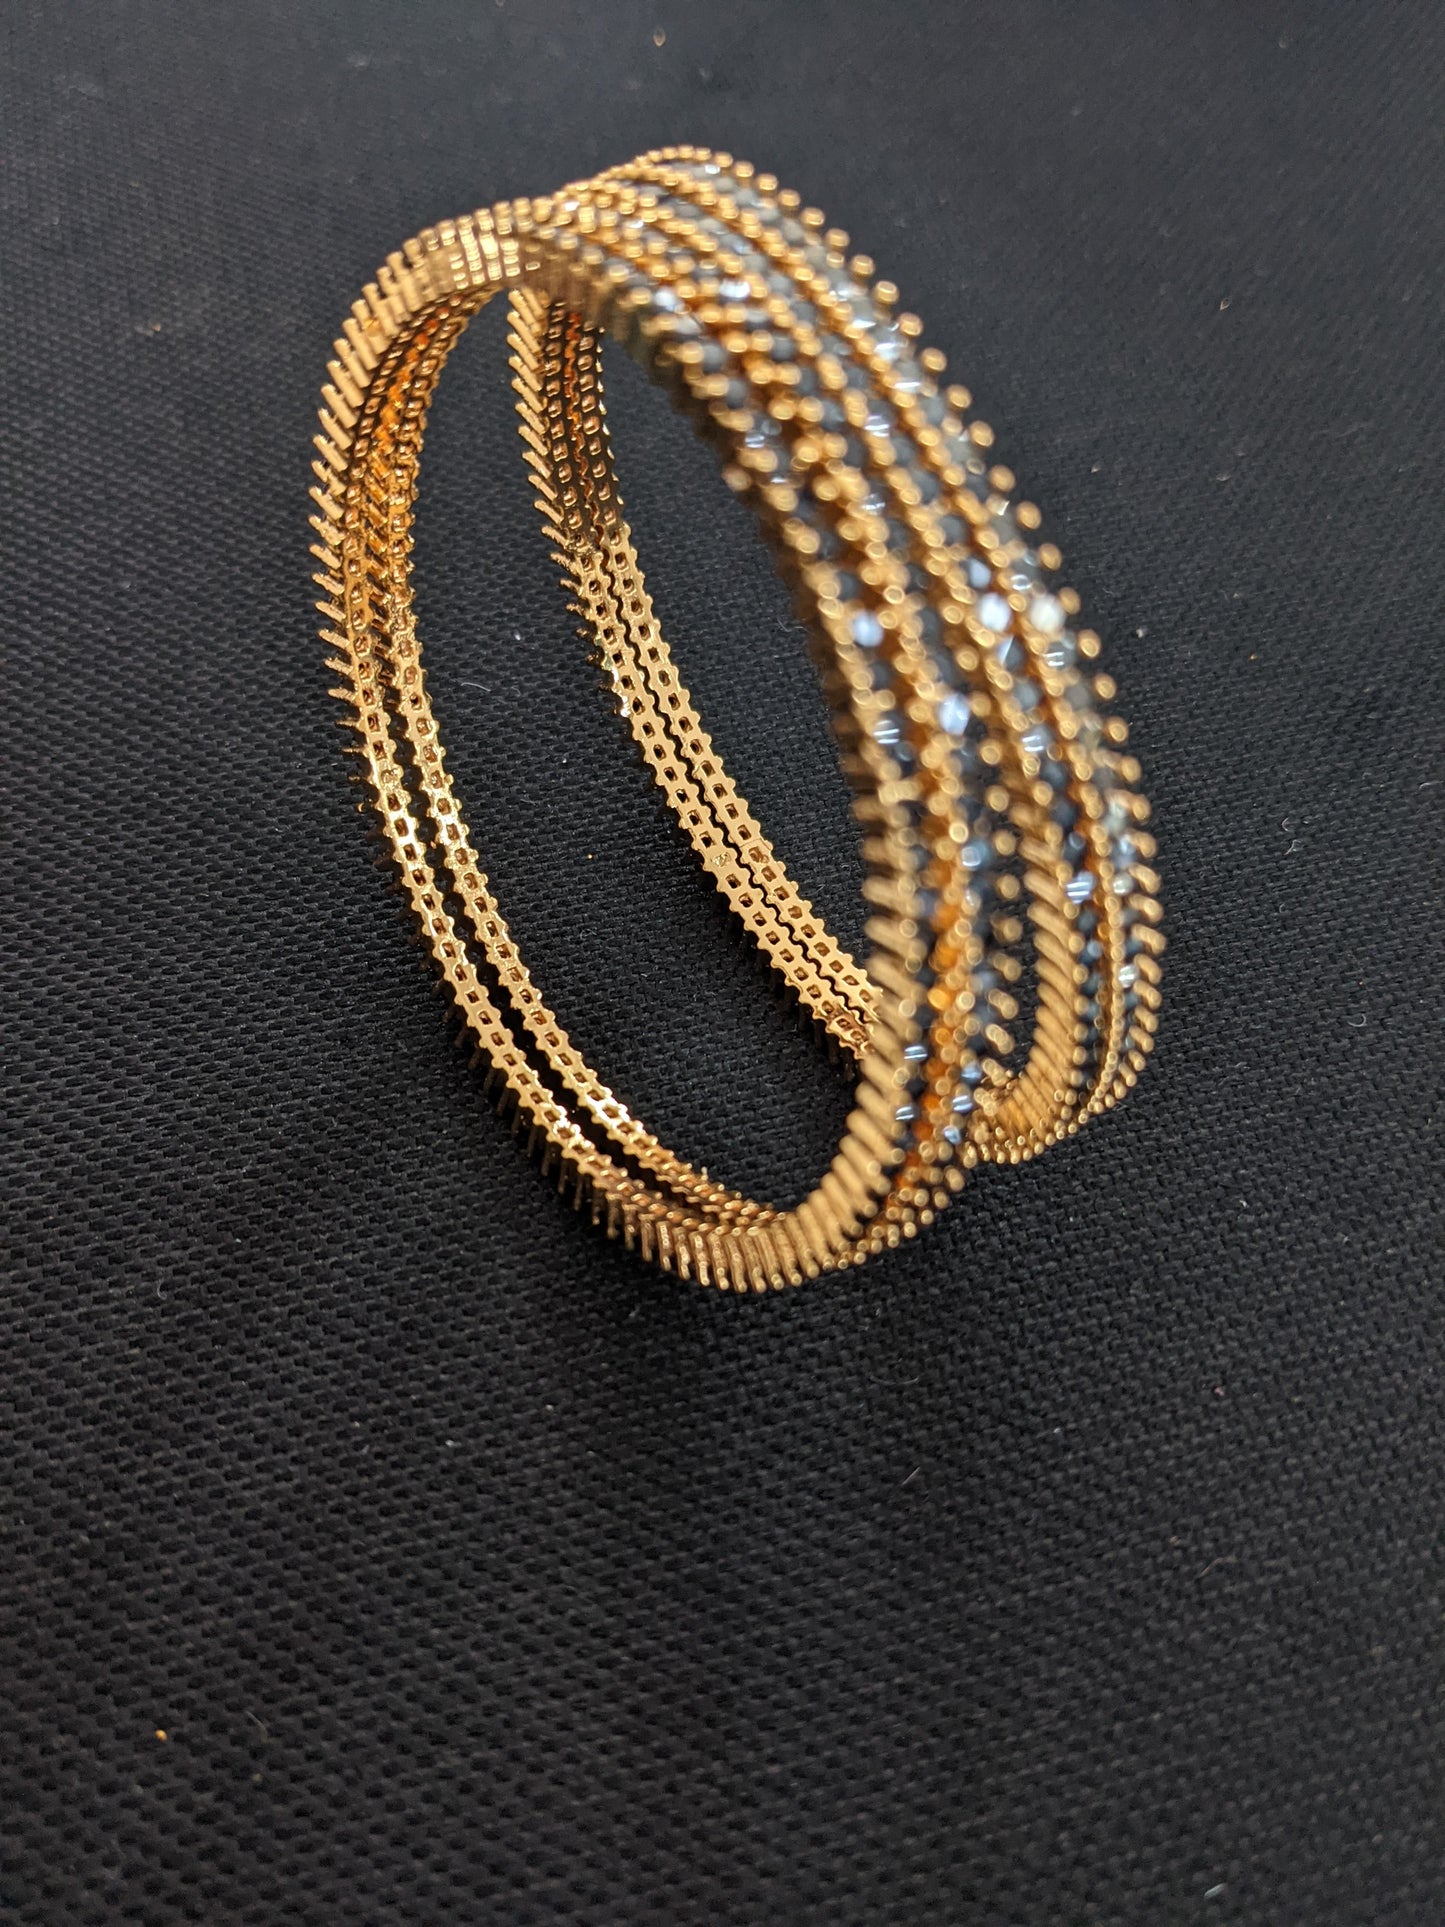 Micro CZ stone One gram gold bangles - Set of 4 - Black